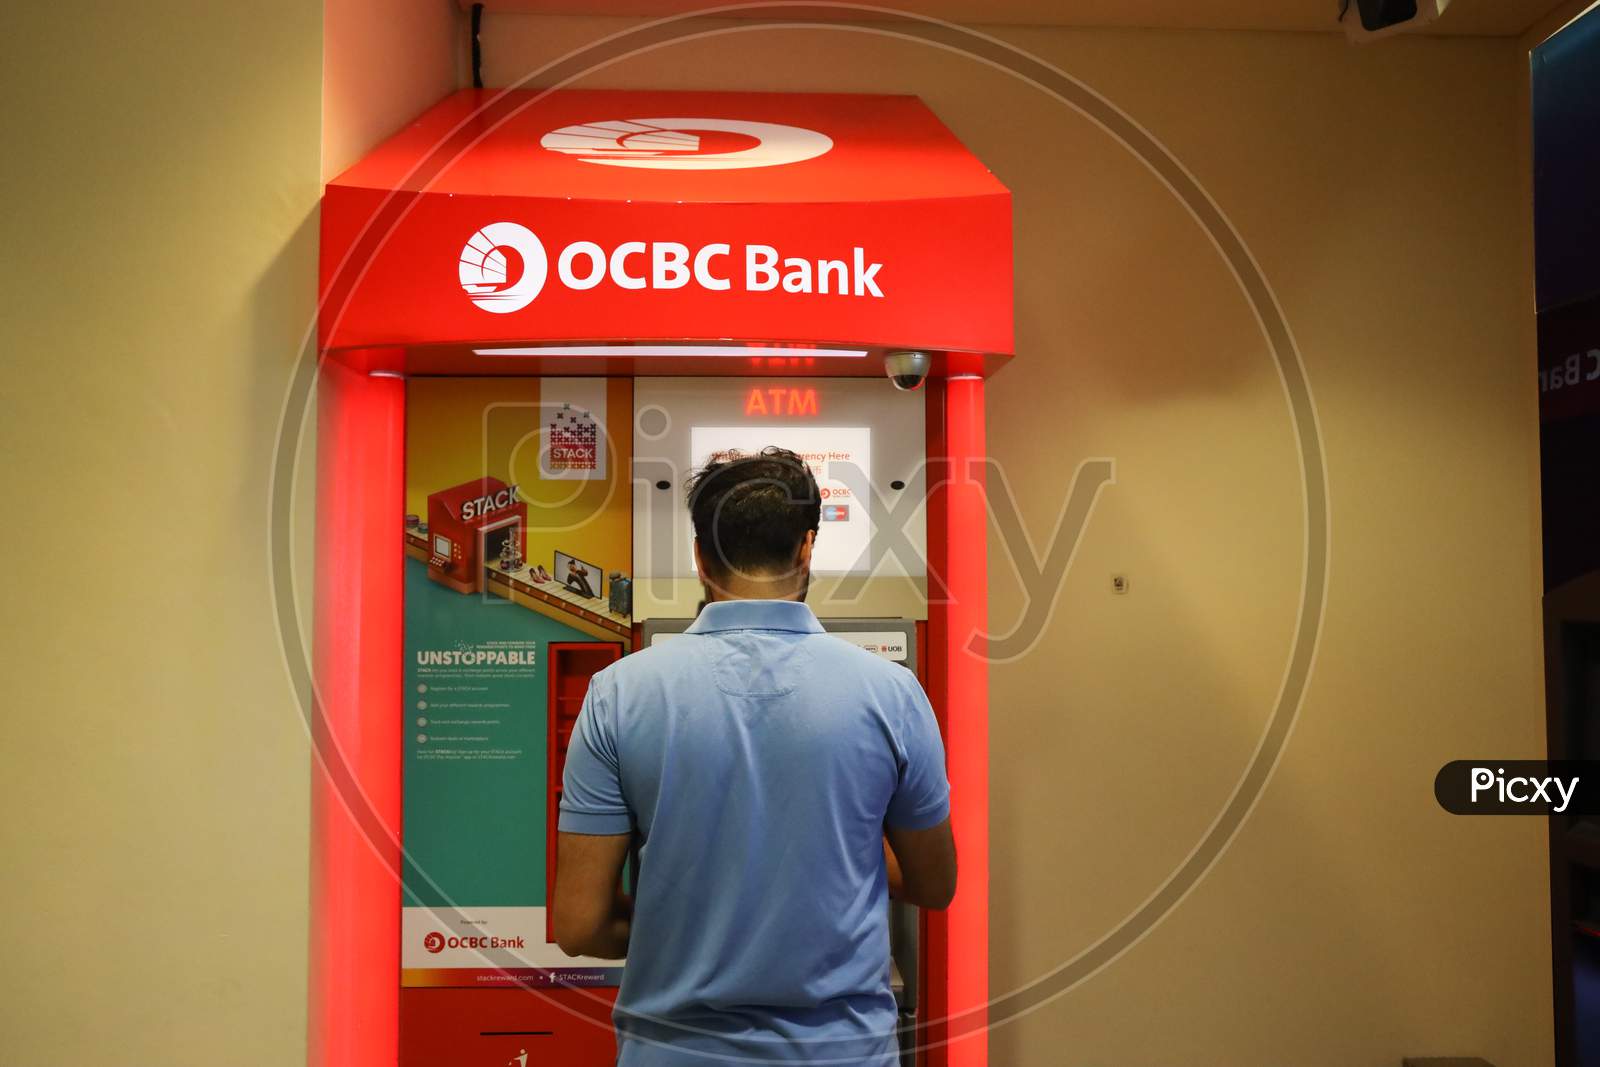 OCBC Bank ATM